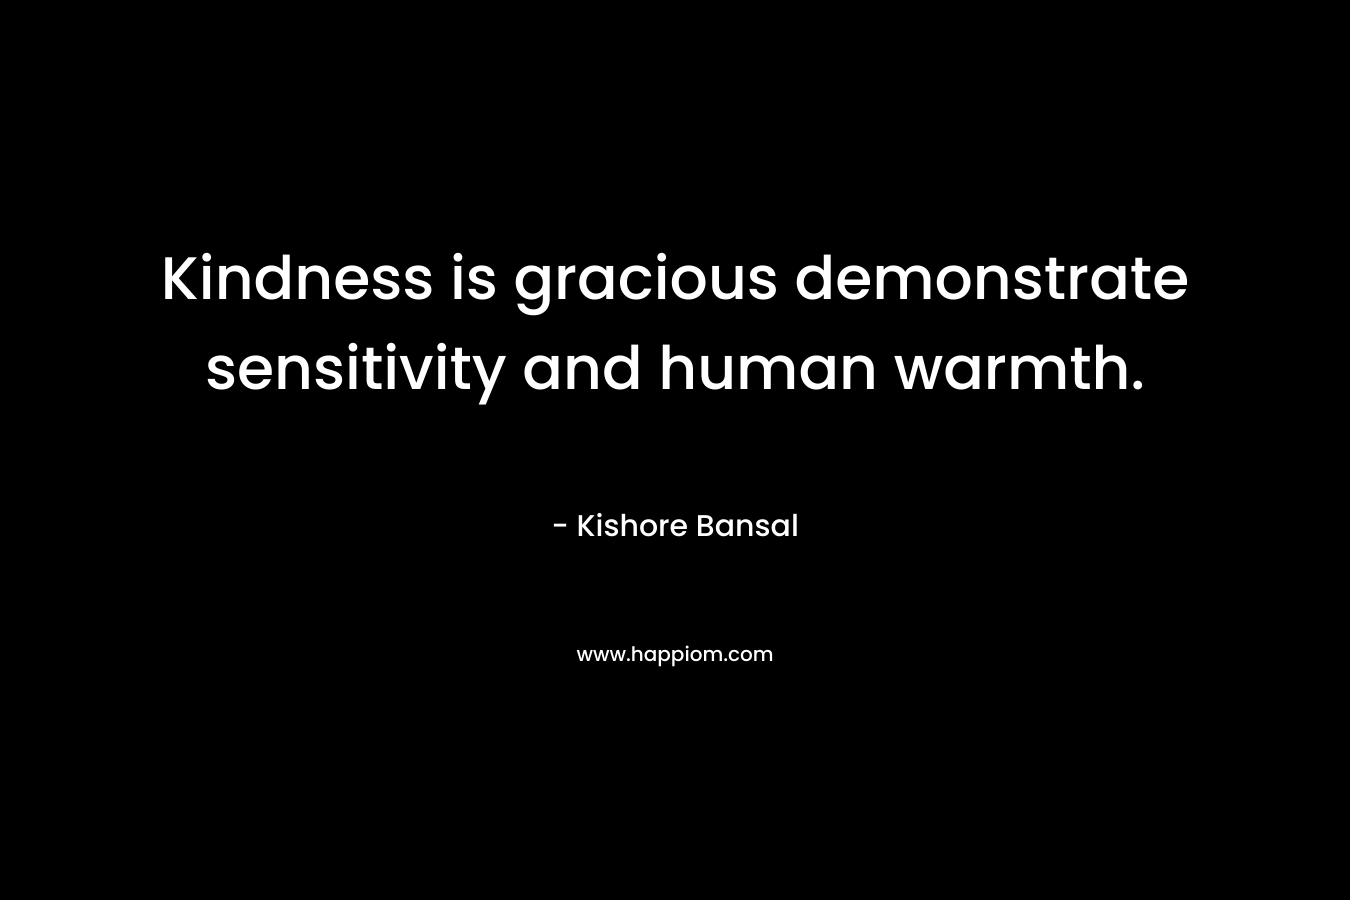 Kindness is gracious demonstrate sensitivity and human warmth. – Kishore Bansal